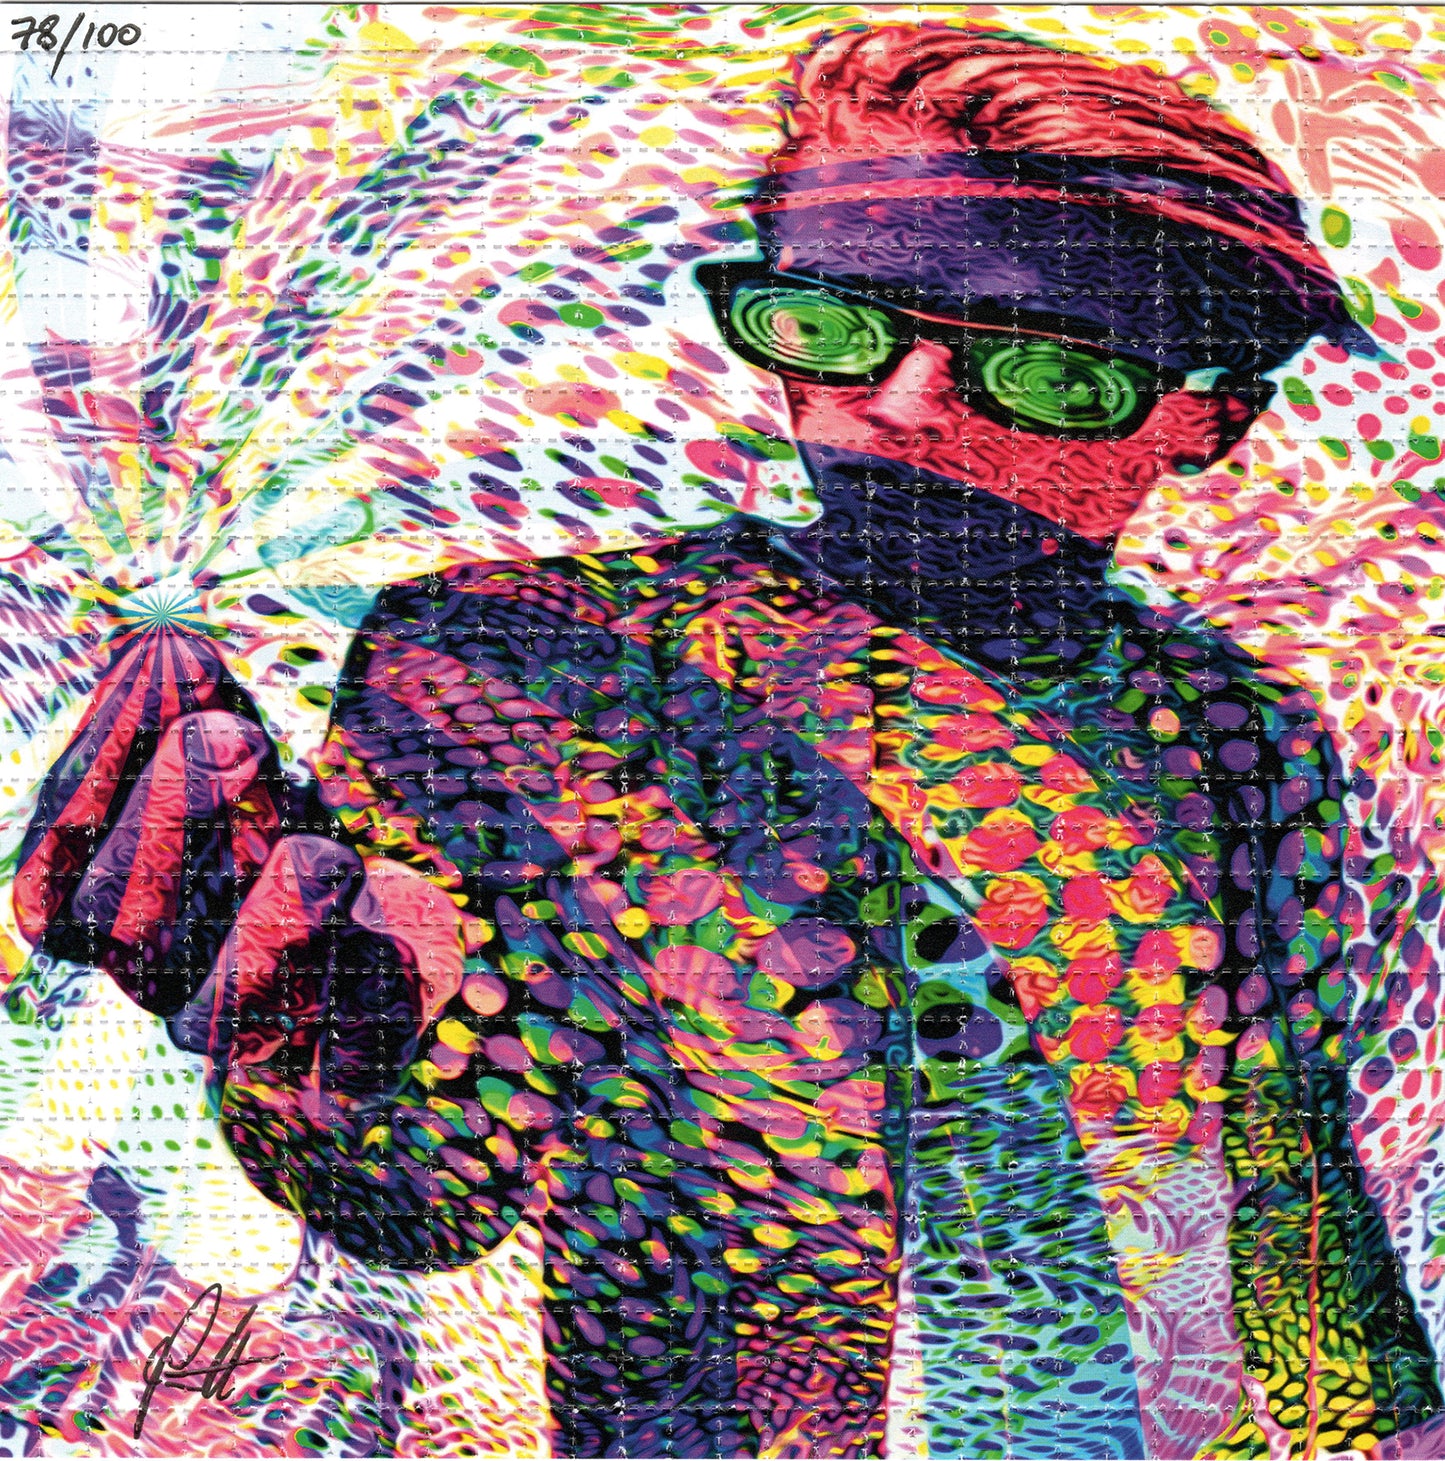 Already Trippin  by Joel Perrett Signed Limited Edition LSD blotter art print